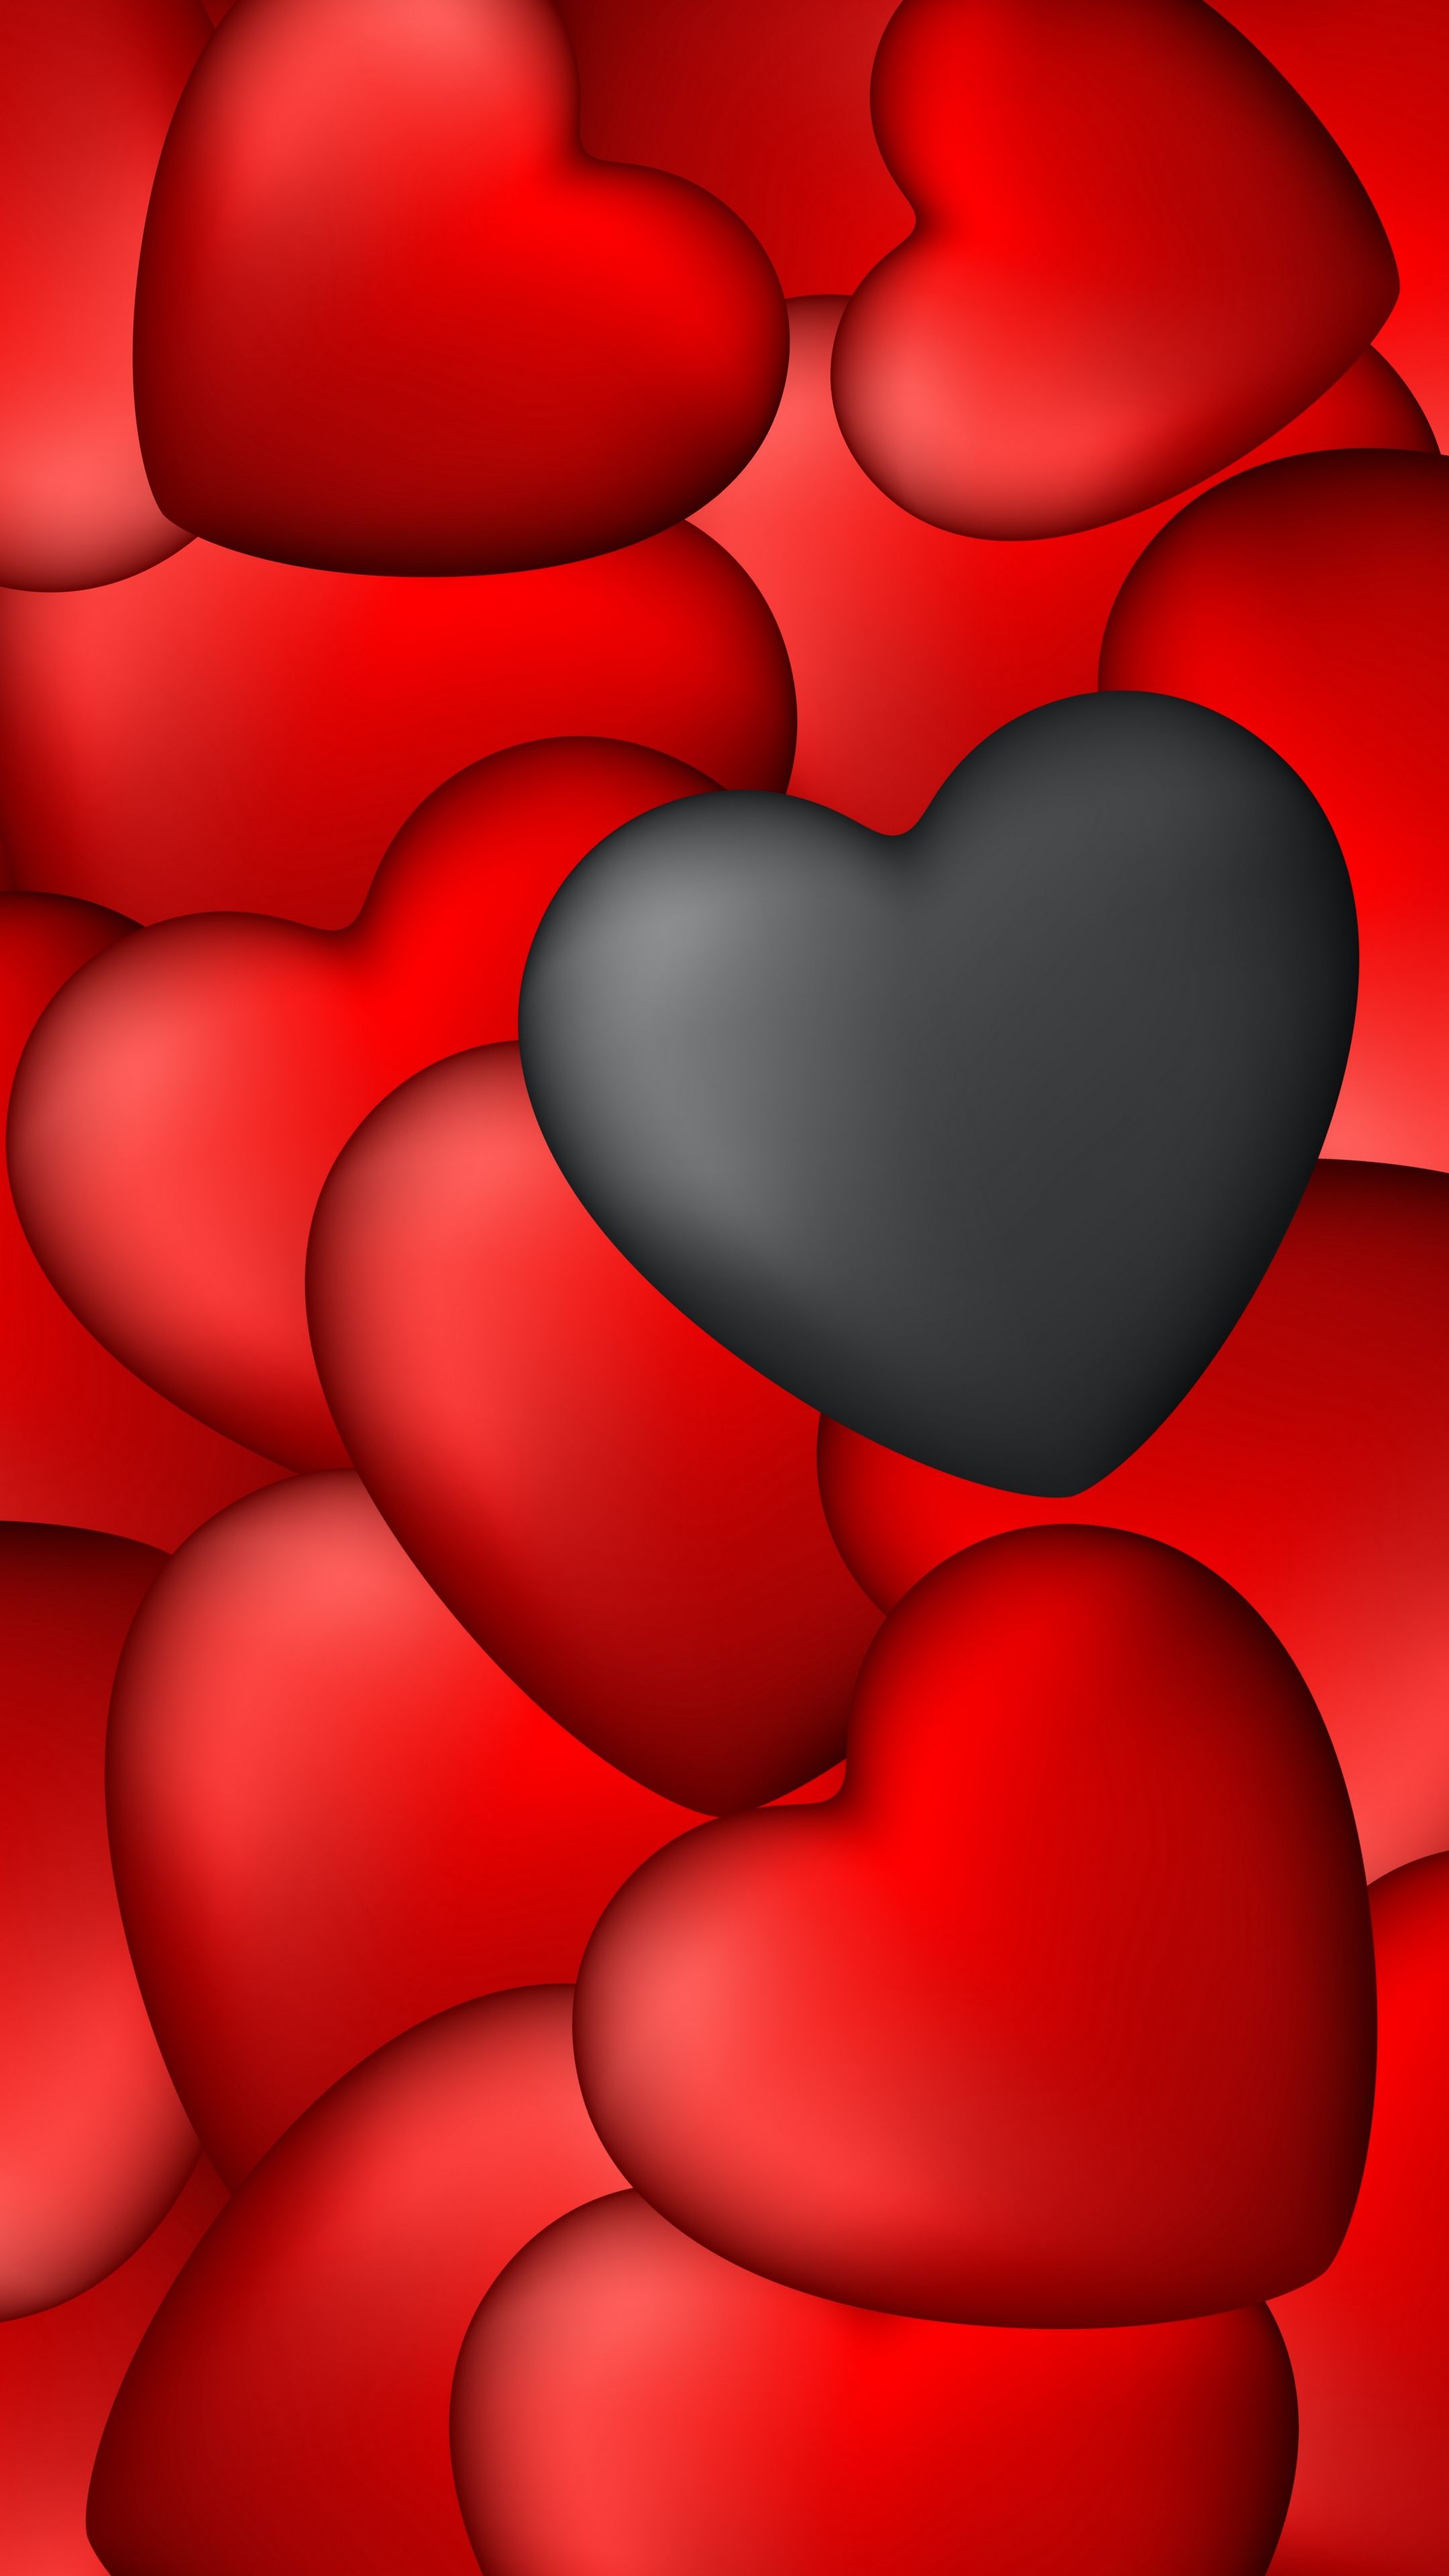 Emotions hearts, art, red #android #wallpaper k #hd. Red and black wallpaper, Heart wallpaper hd, Android wallpaper